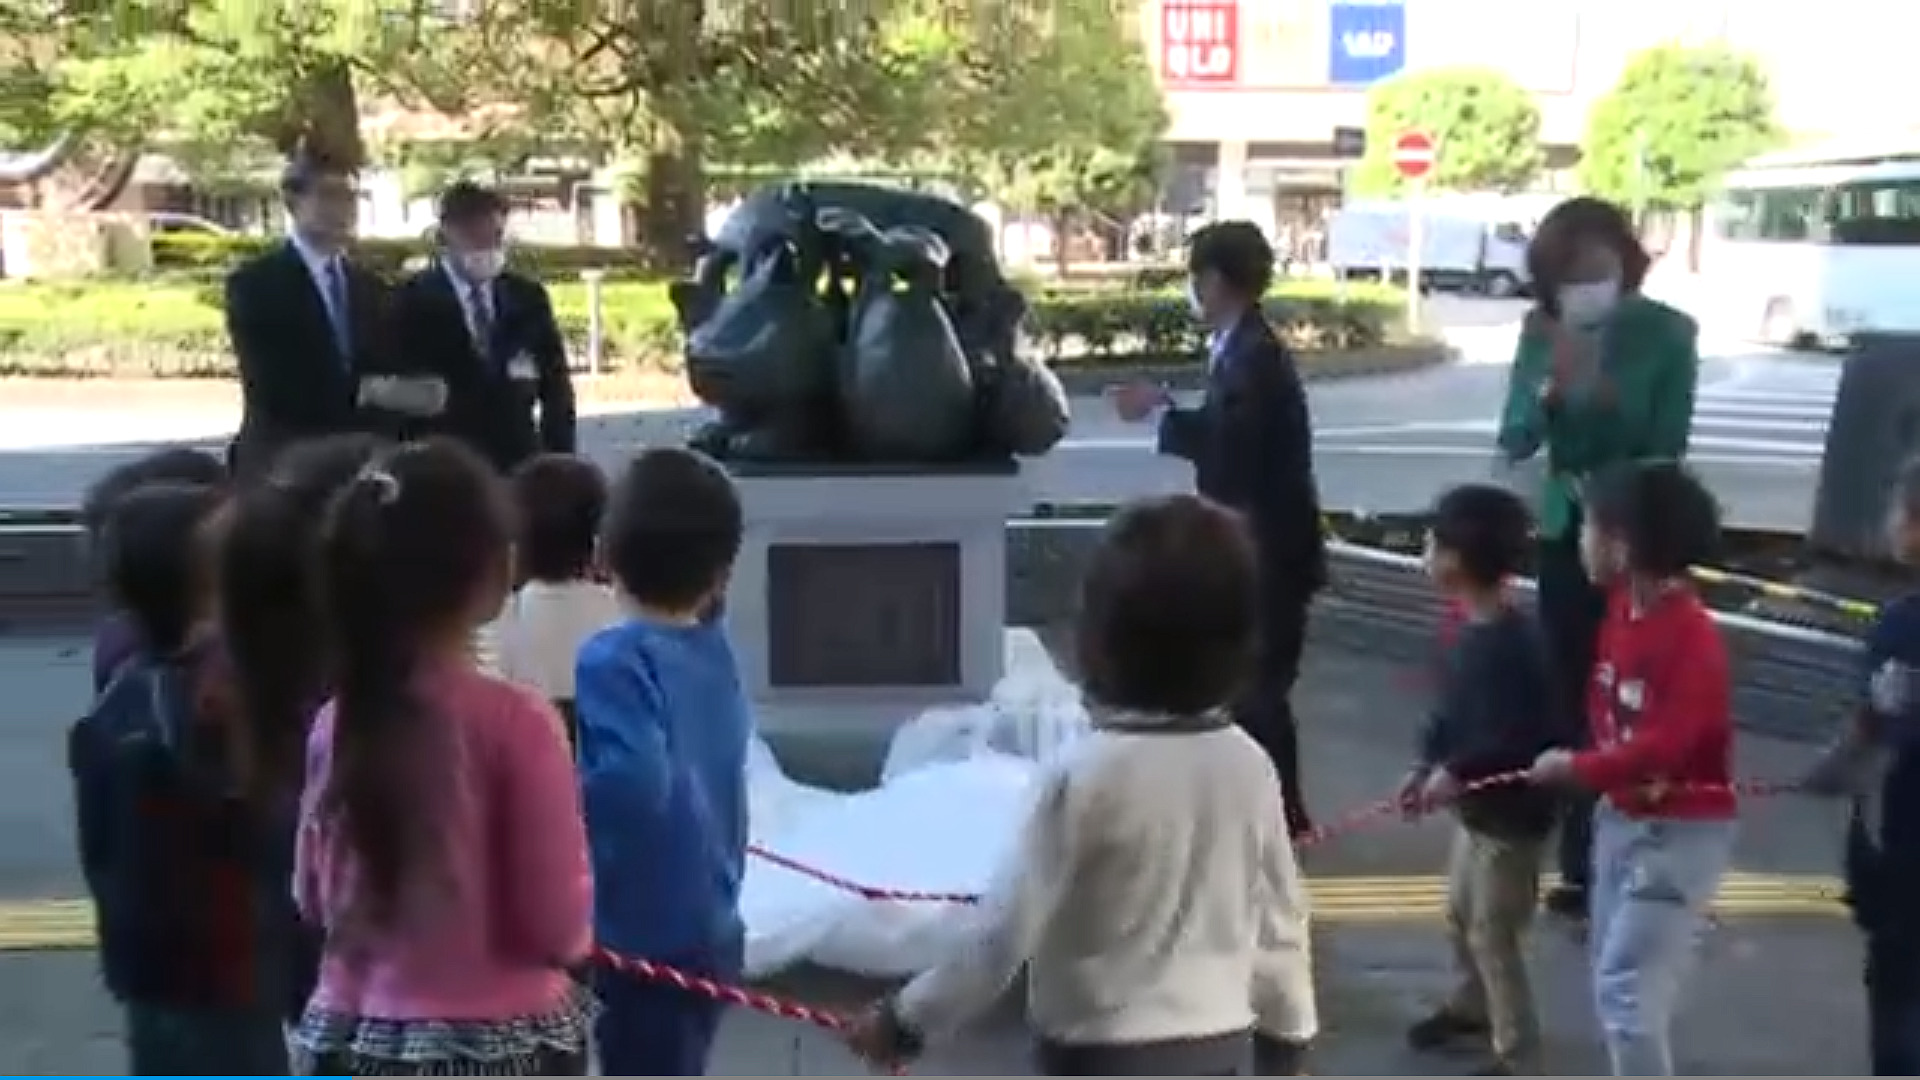 My Neighbor Totoro statue unveiling, via NHK